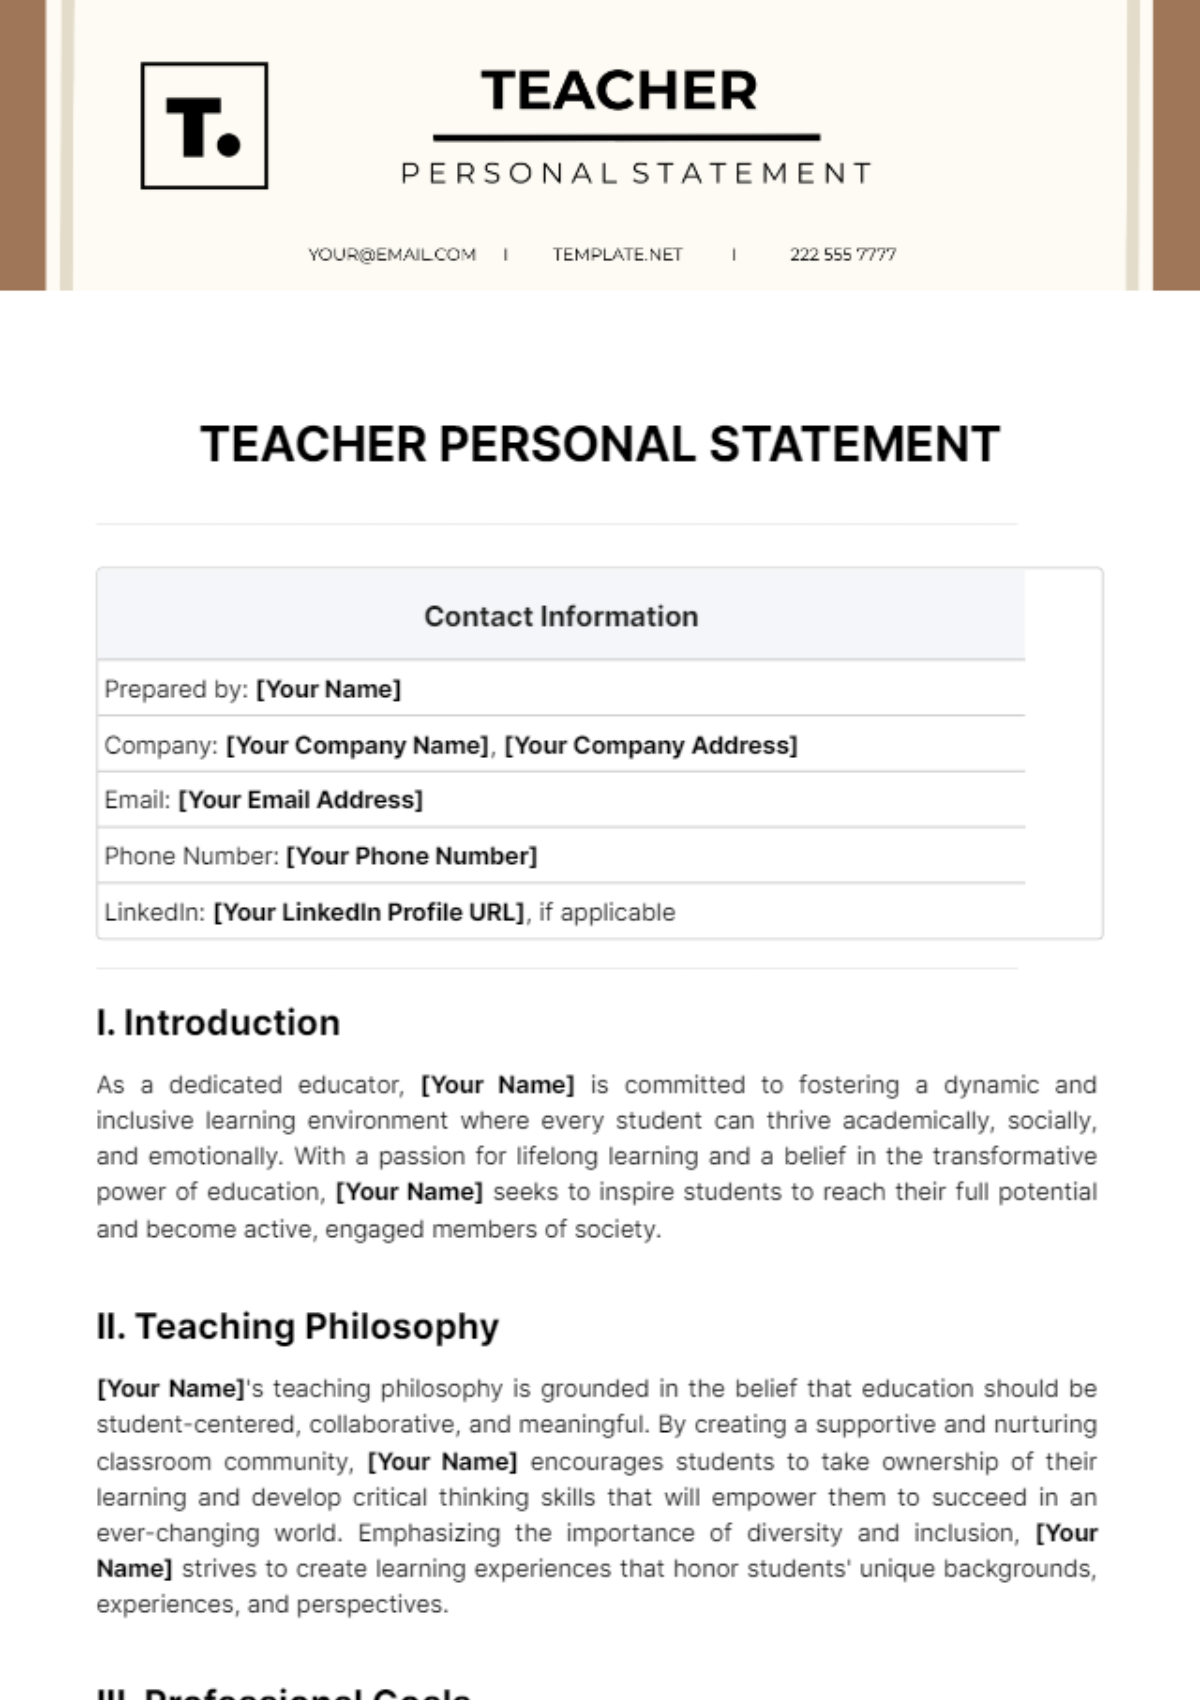 Teacher Personal Statement Template